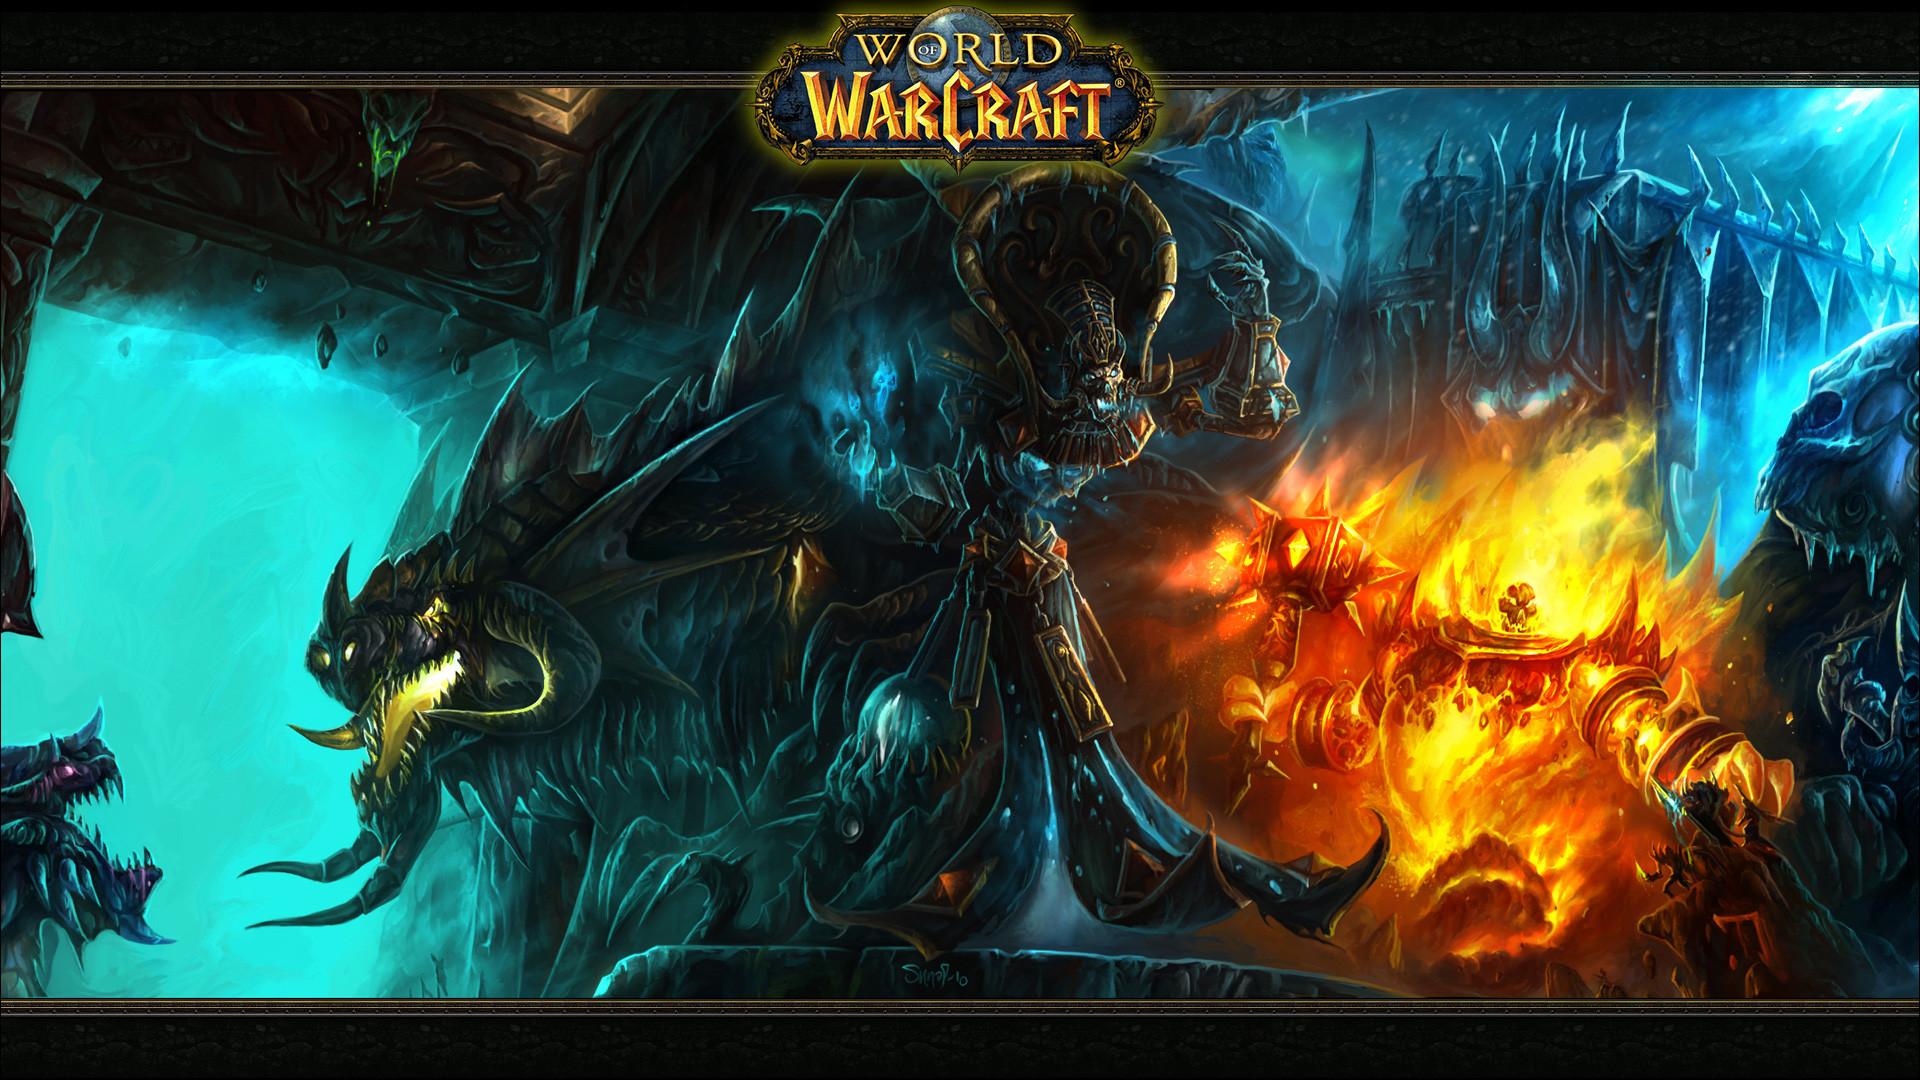 World of Warcraft Wallpaper (immagini)